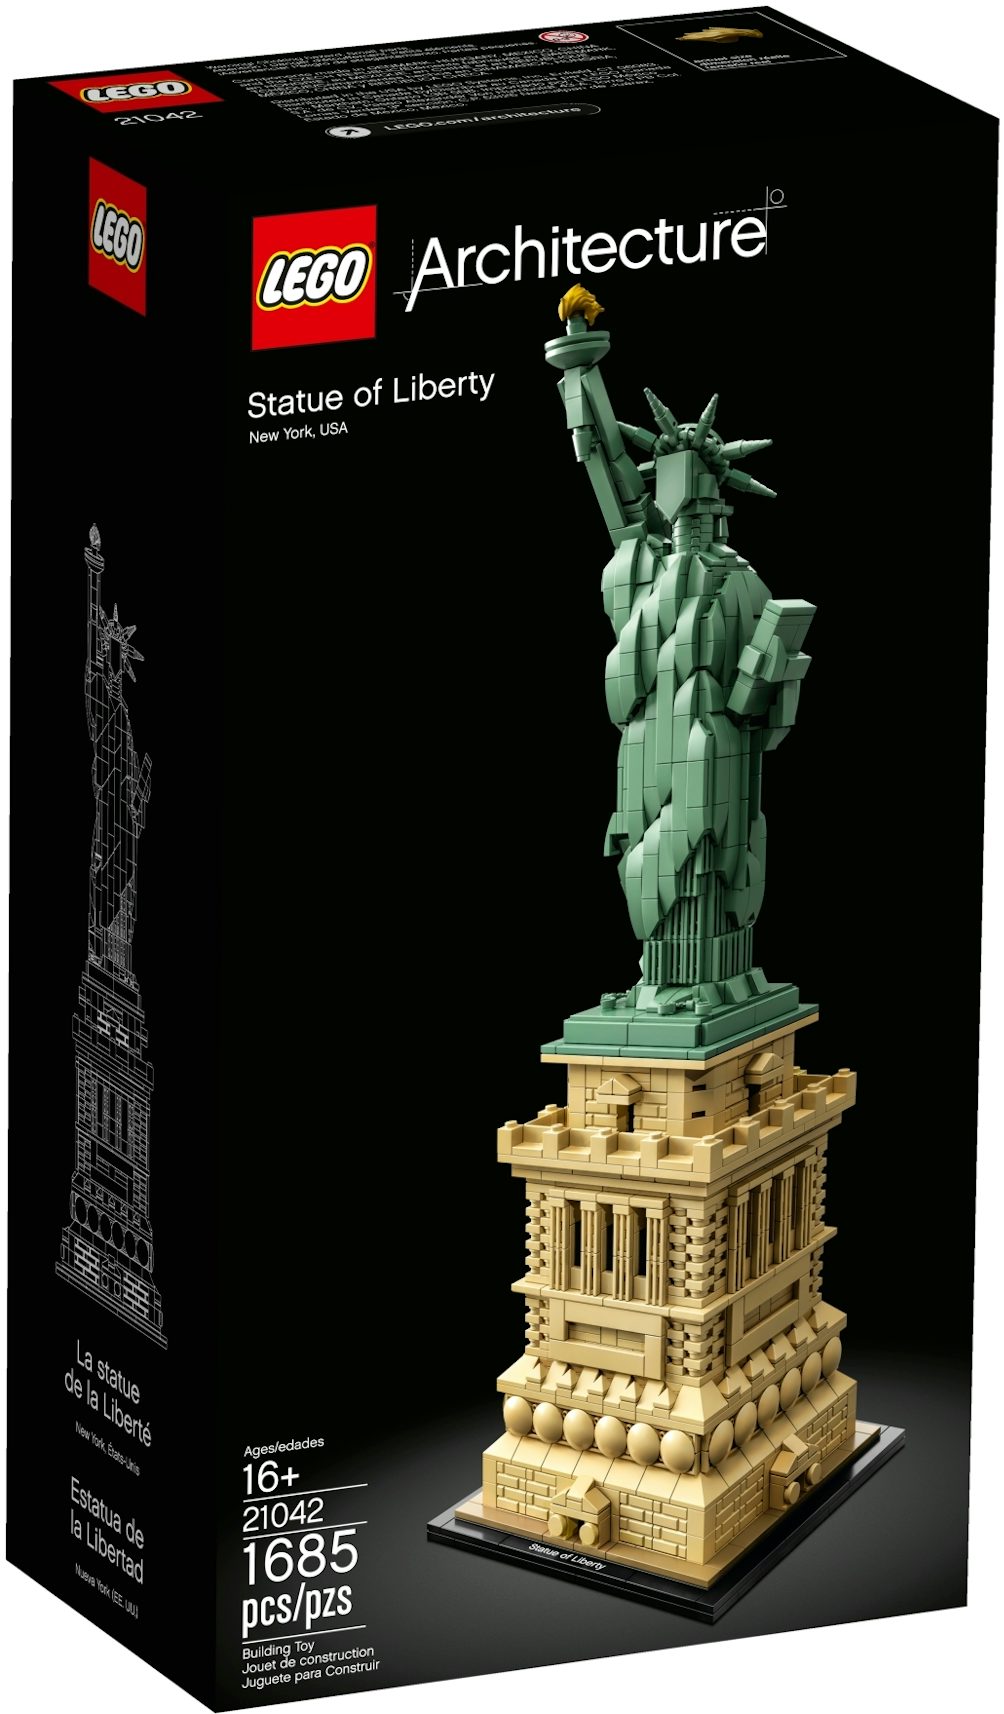 https://images.stockx.com/images/LEGO-Architecture-Statue-of-Liberty-Set-21042.jpg?fit=fill&bg=FFFFFF&w=1200&h=857&fm=jpg&auto=compress&dpr=2&trim=color&updated_at=1650657336&q=60